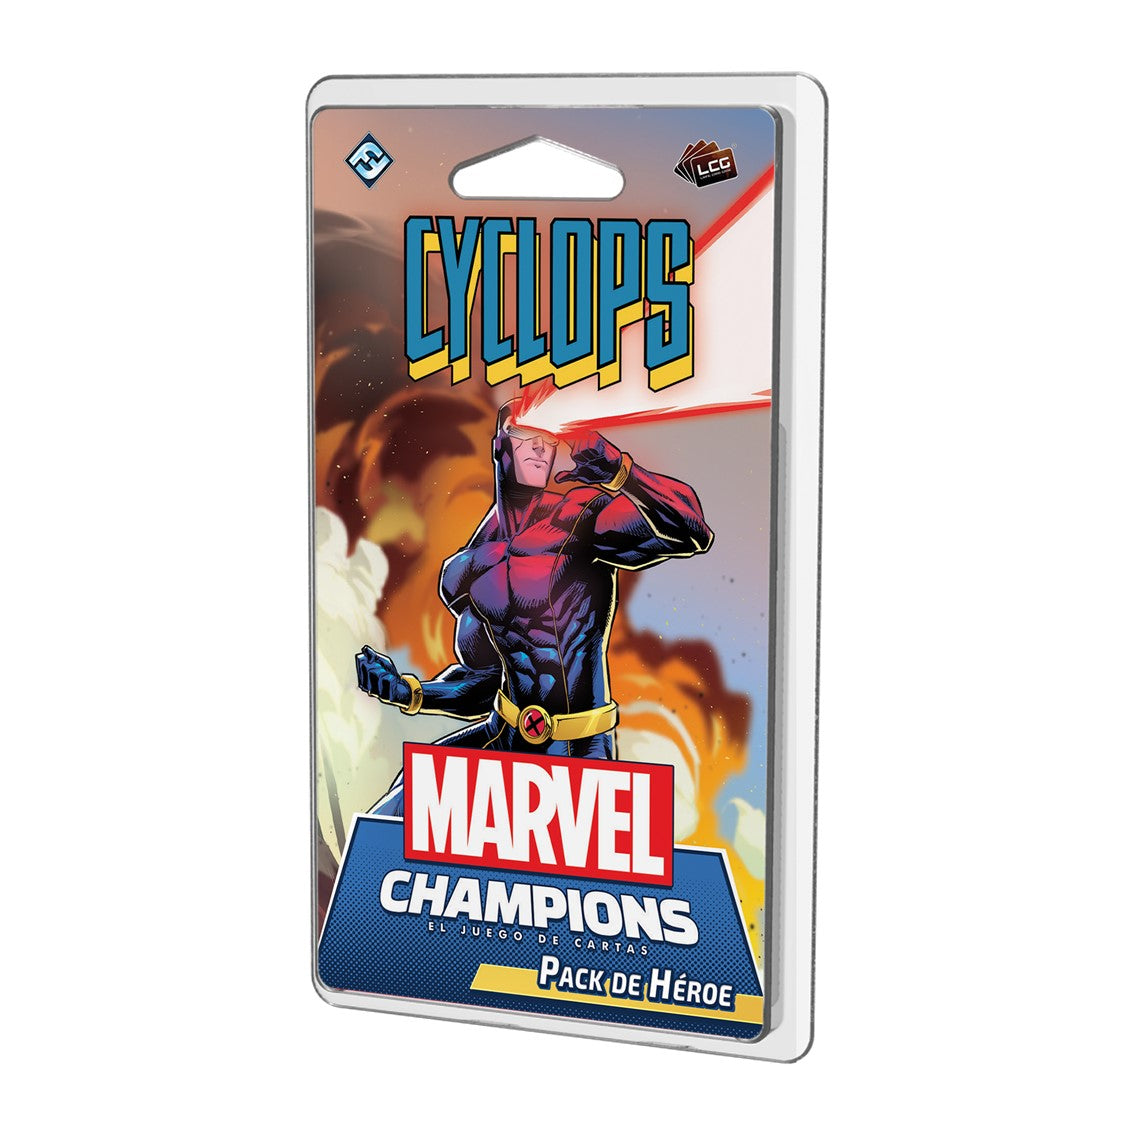 Juego de mesa Marvel Champions: Cyclops (pack de héroe)